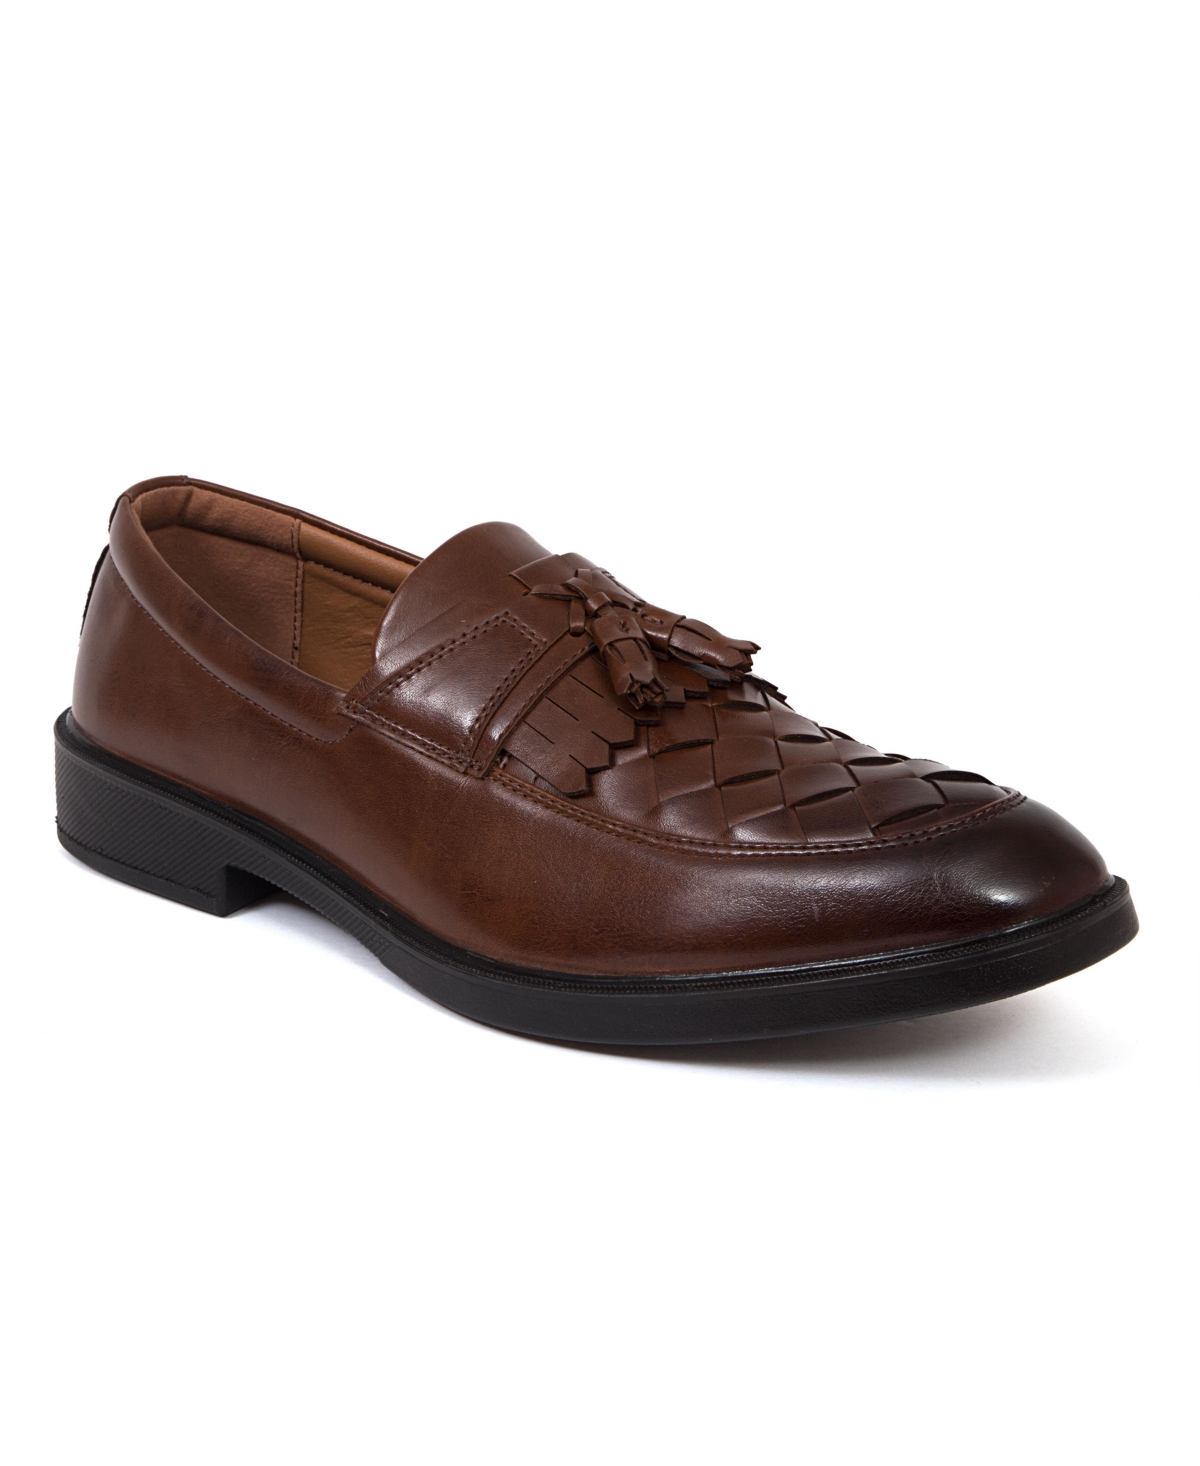 Men's Borough Kiltie Tassel Comfort Loafers - Brown